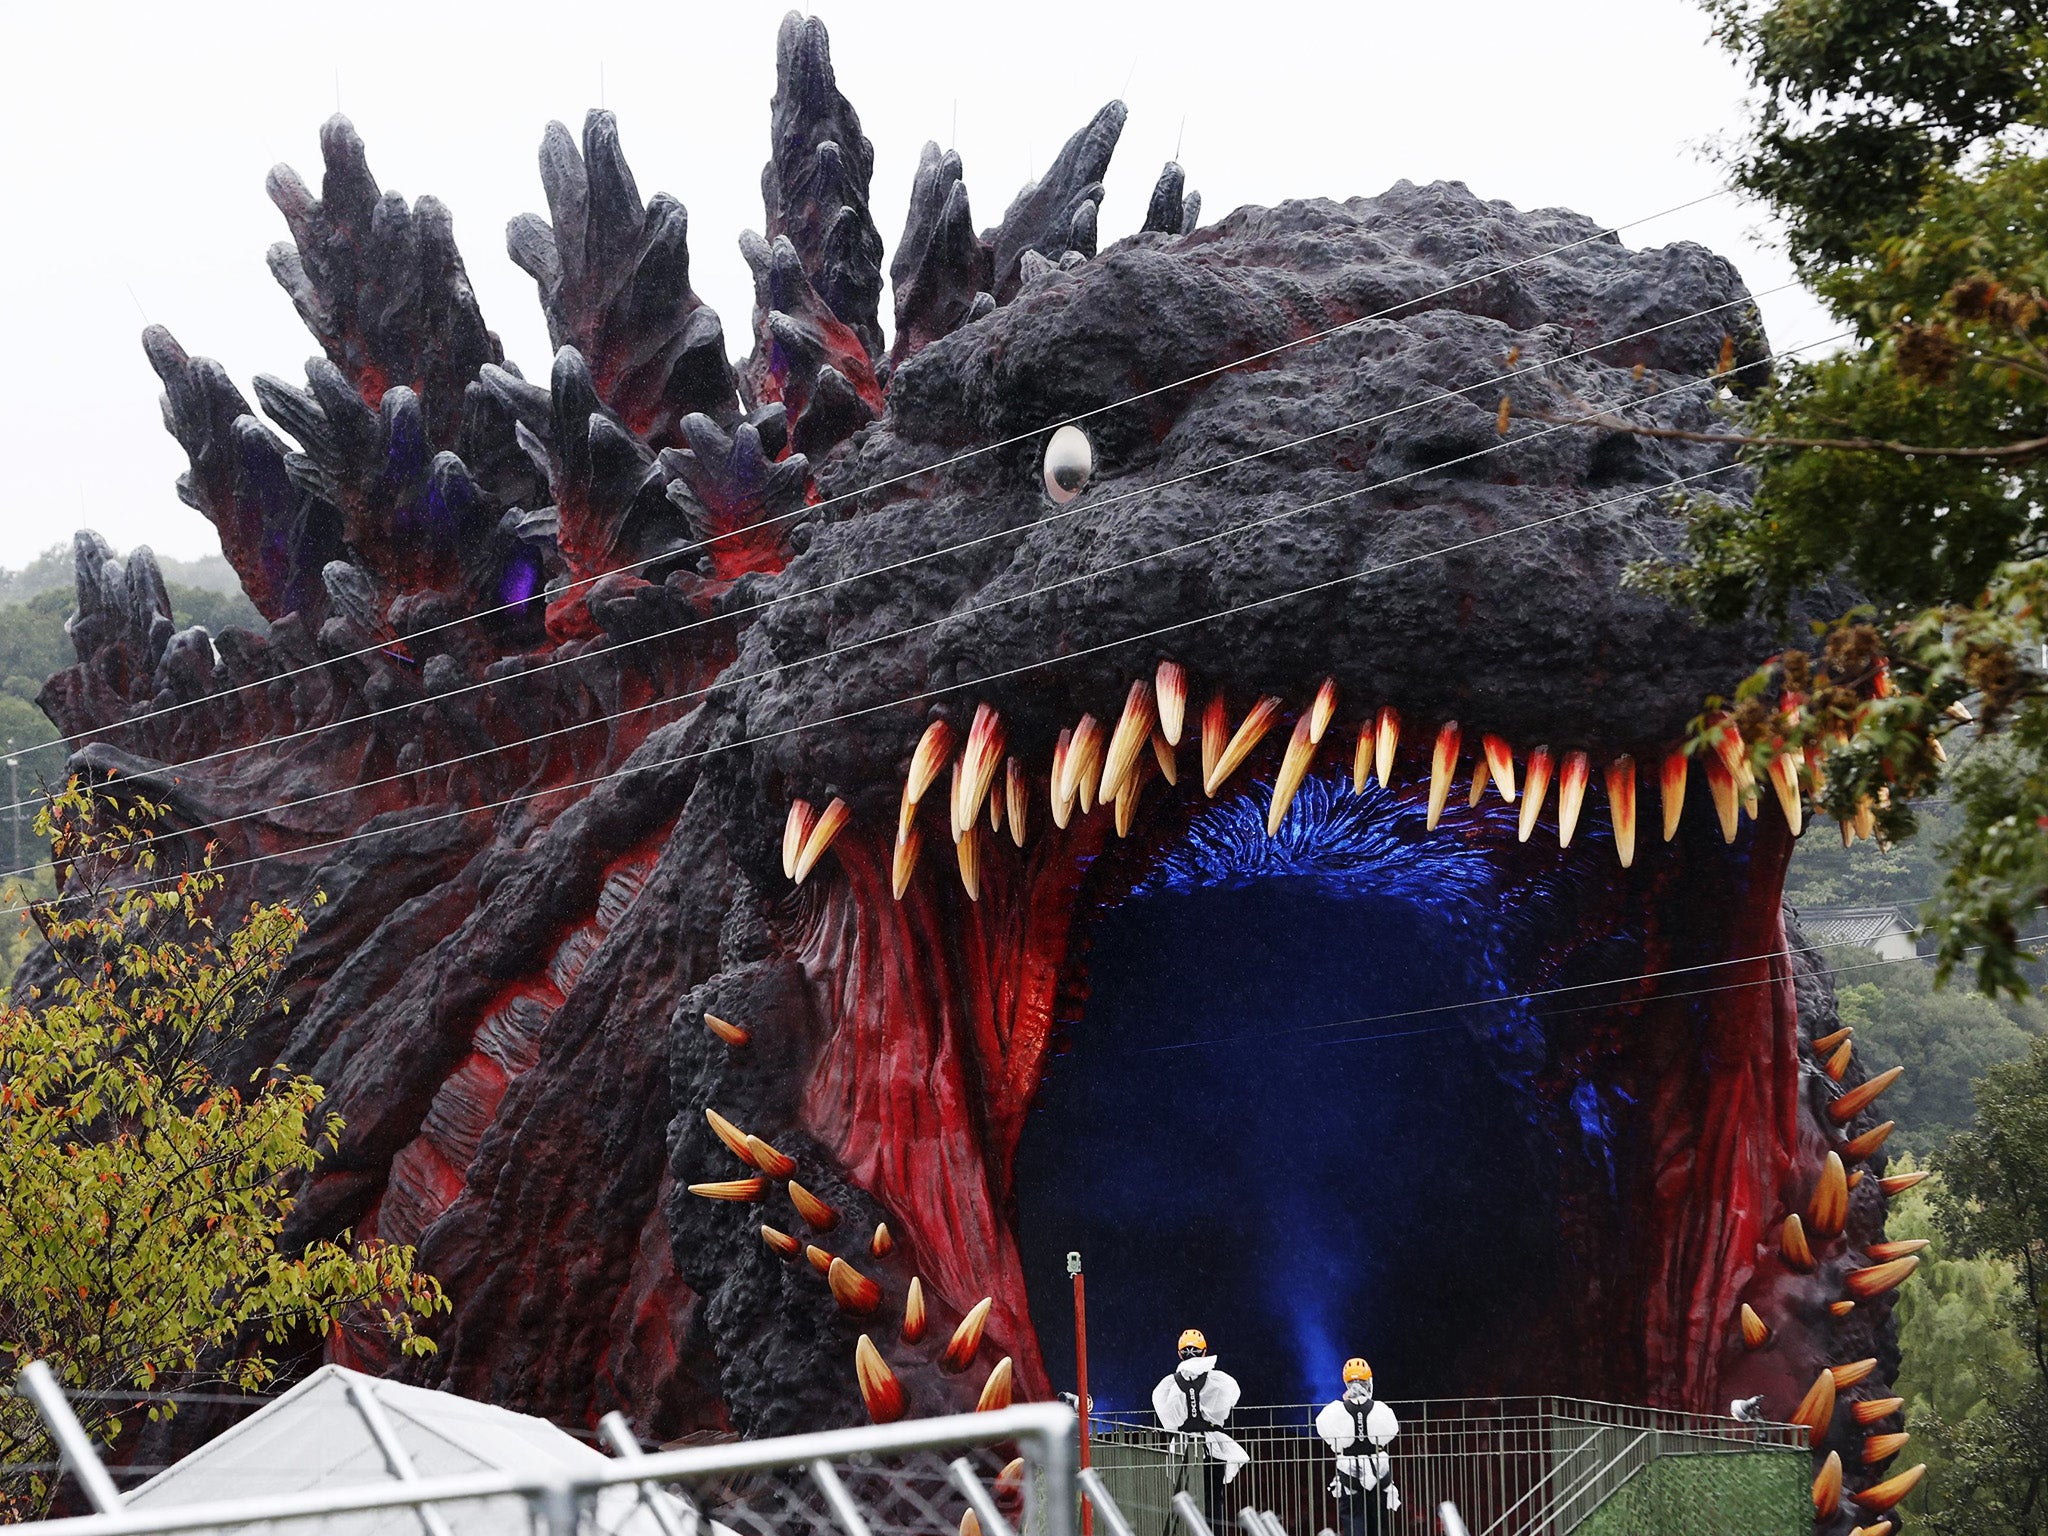 Life-size Godzilla model is first of its kind